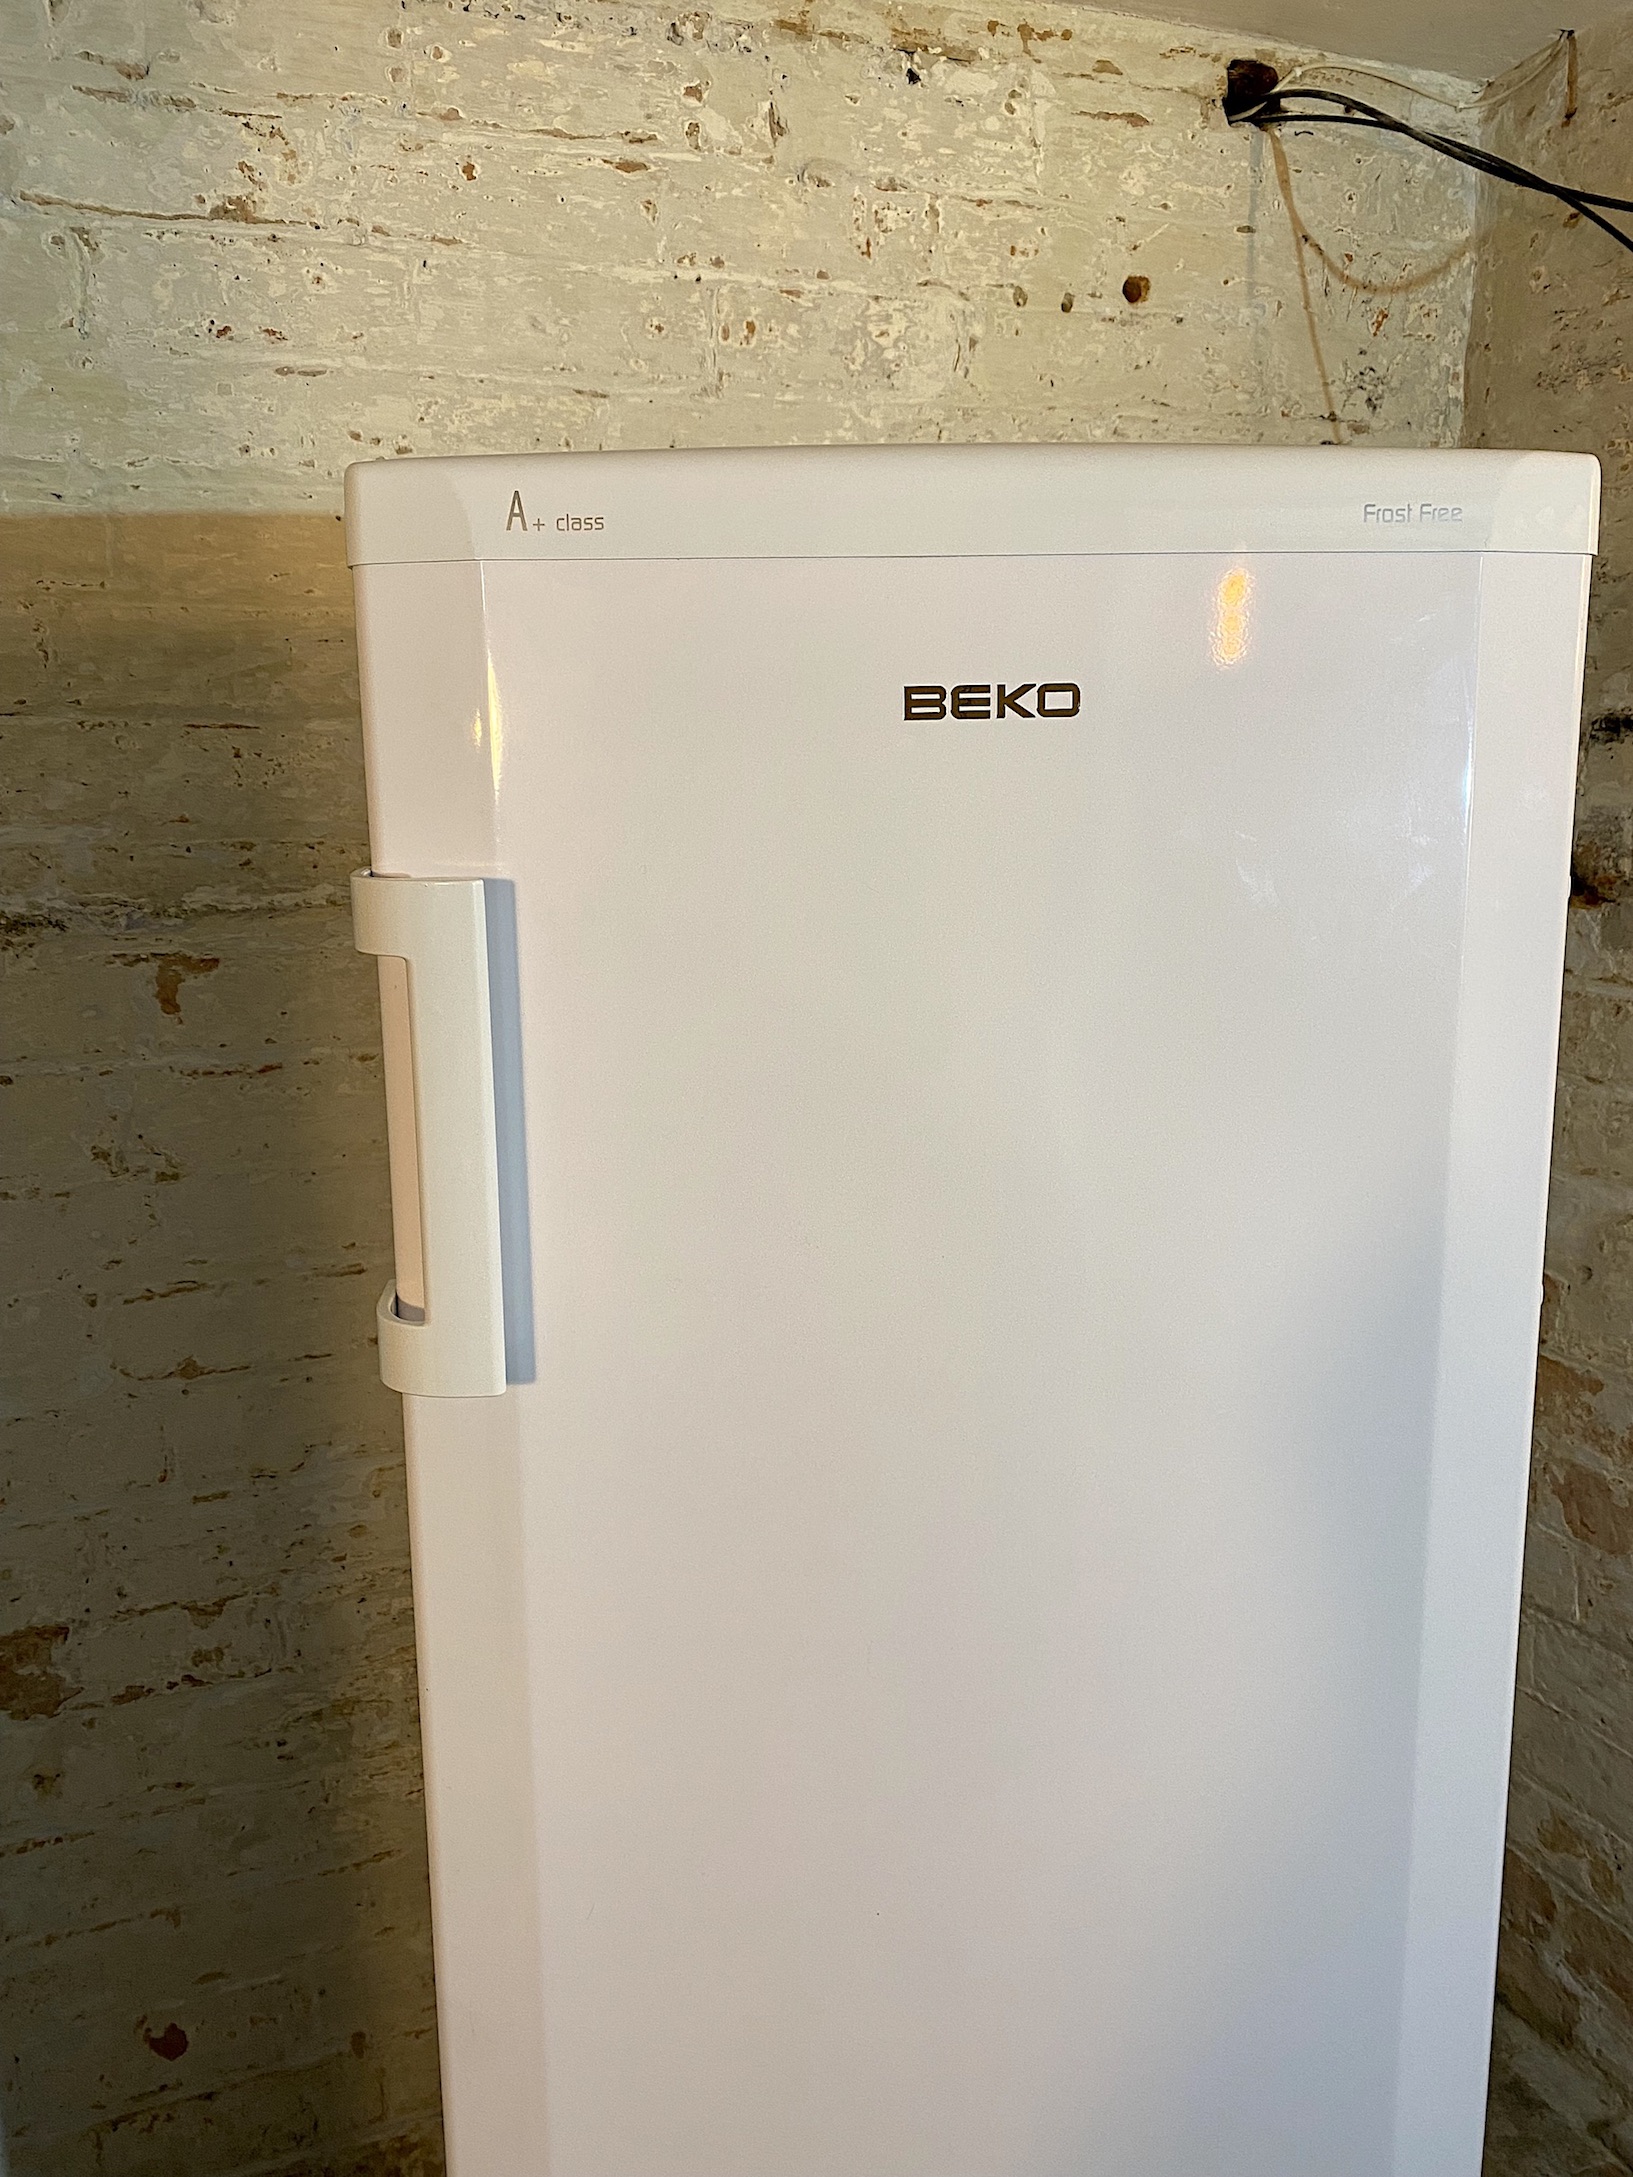 beko upright freezer in cellar